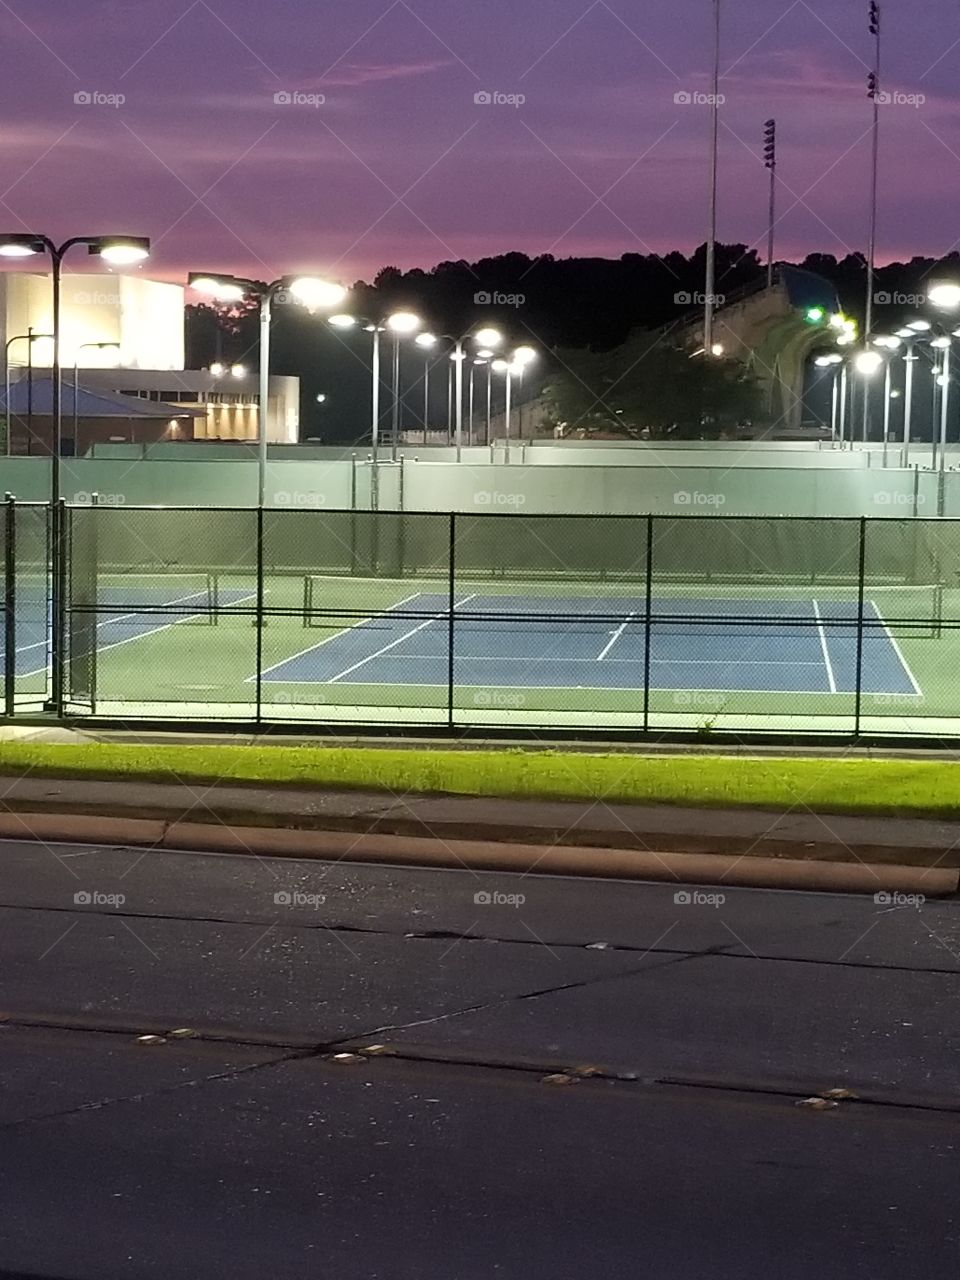 Night time tennis